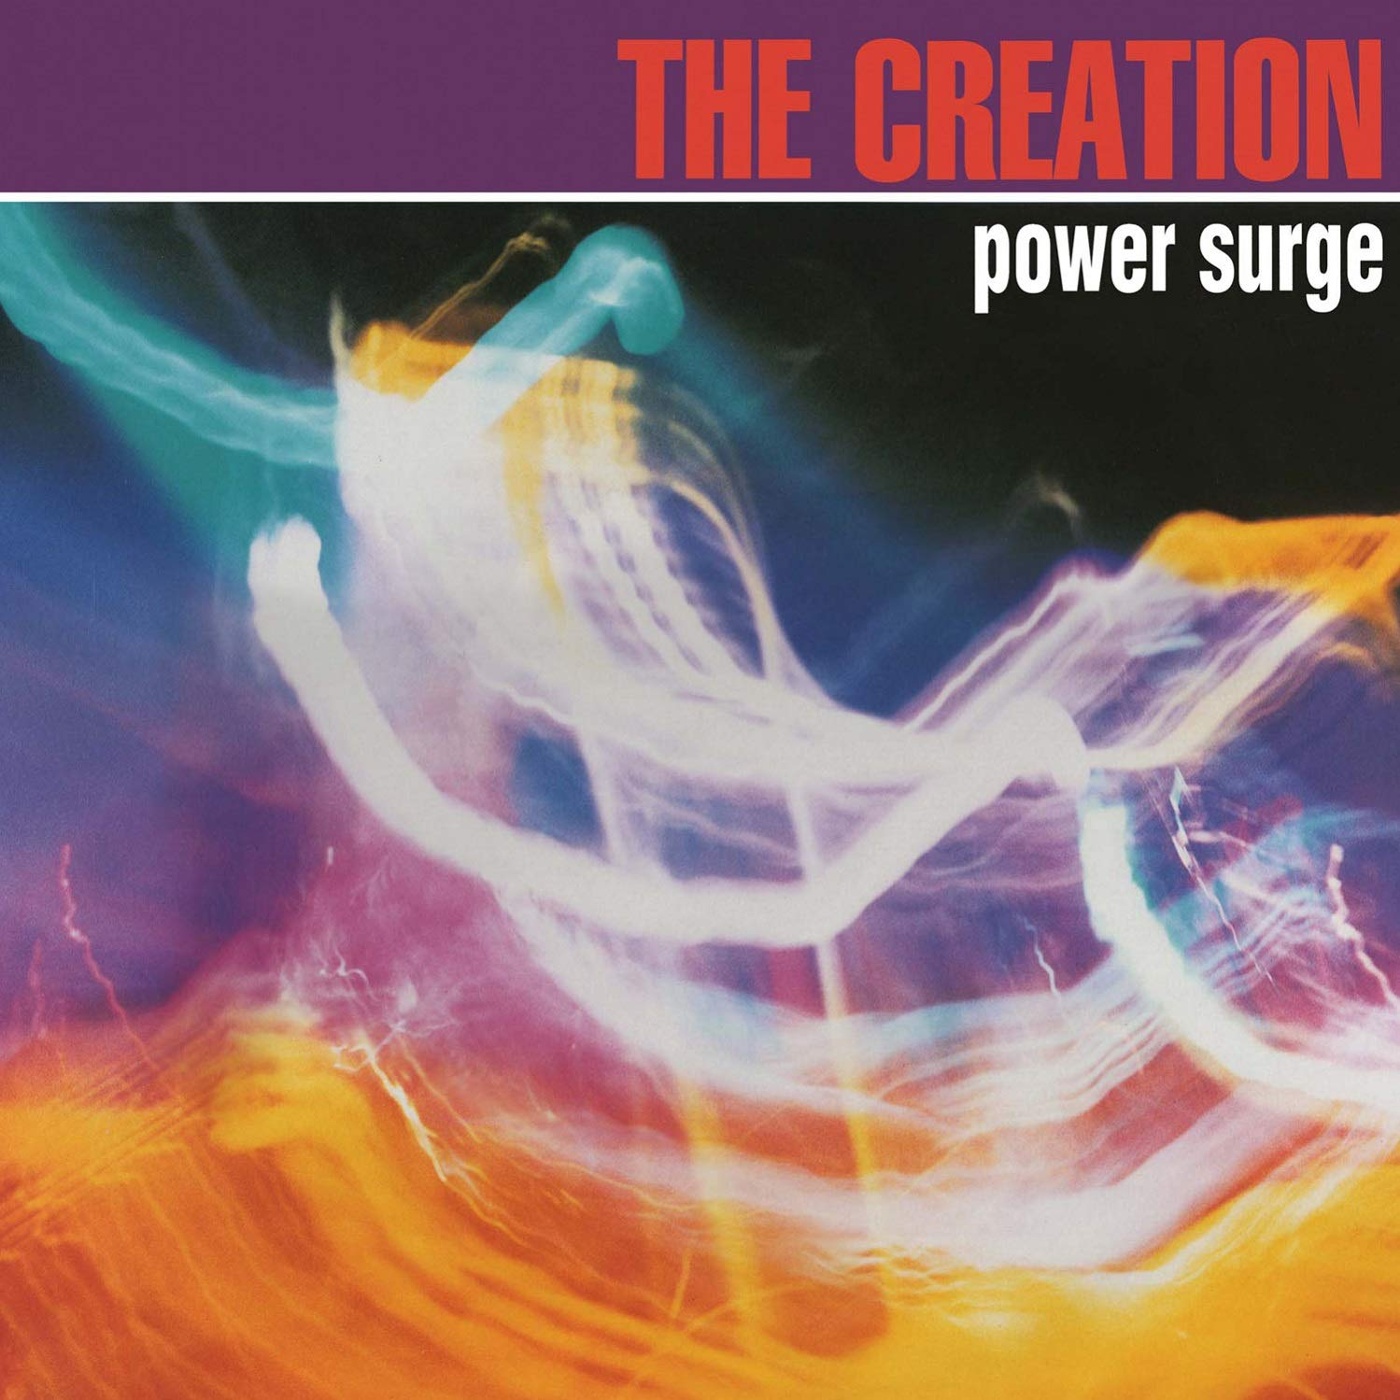 Power surge. The Power and Creation книга. ((( O ))) альбом ((( 1 ))) Creation. Creation "Power Surge".